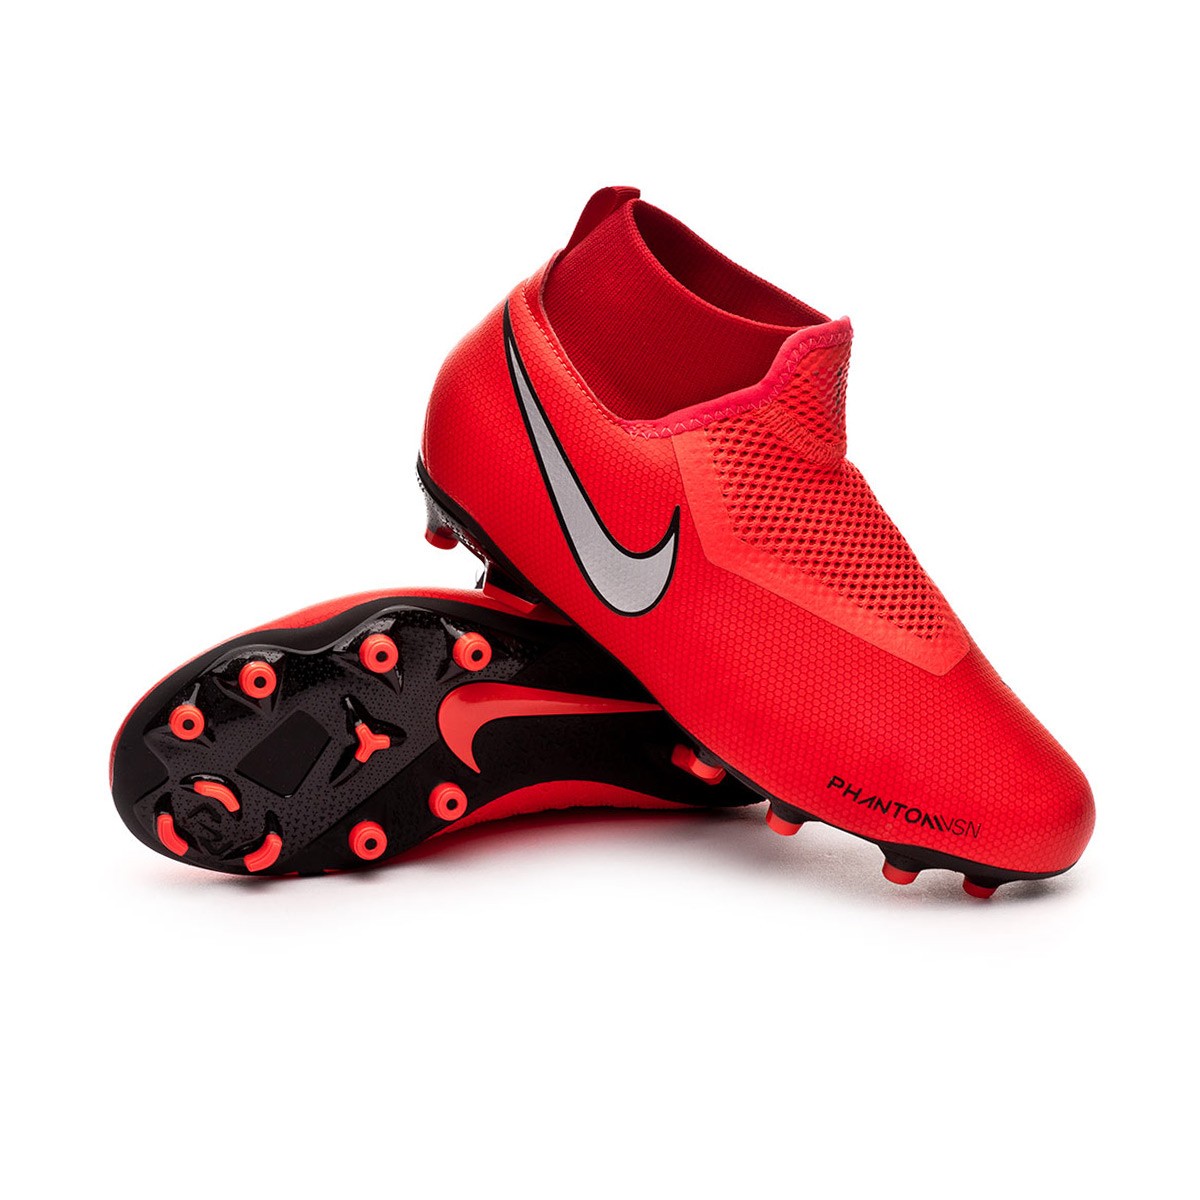 Nike Phantom Football Boots HyperVenom Vision Sports